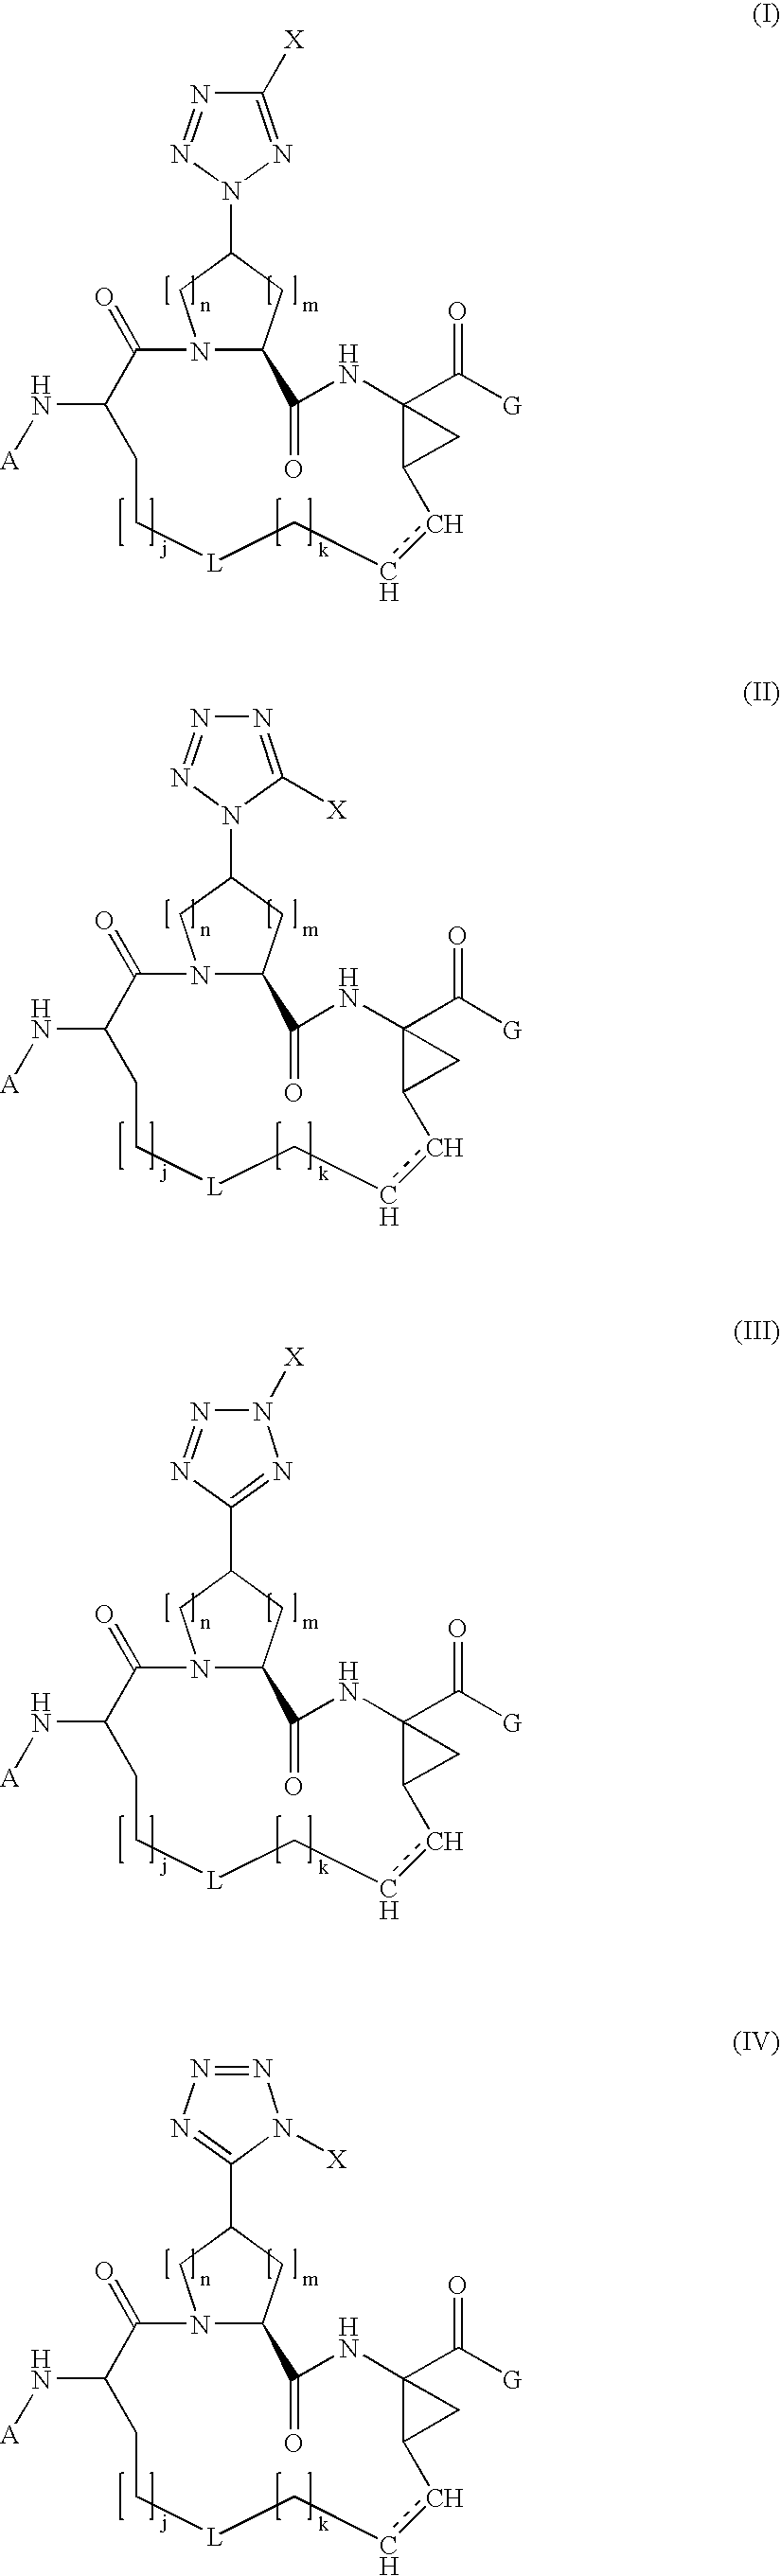 Tetrazolyl macrocyclic hepatitis c serine protease inhibitors